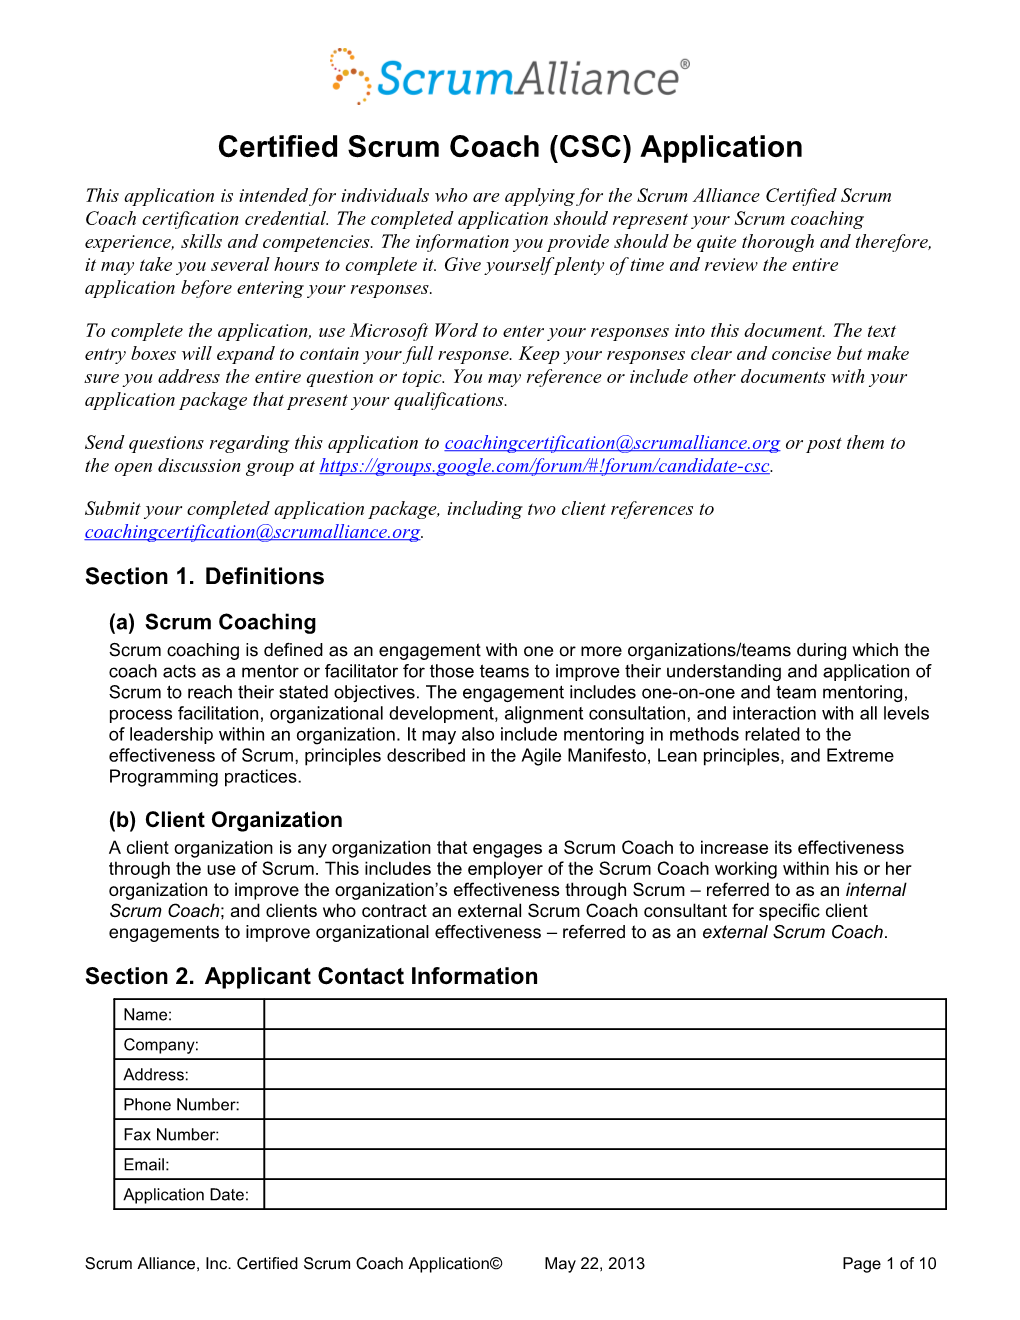 Certified Scrum Coach Application Questionnaire